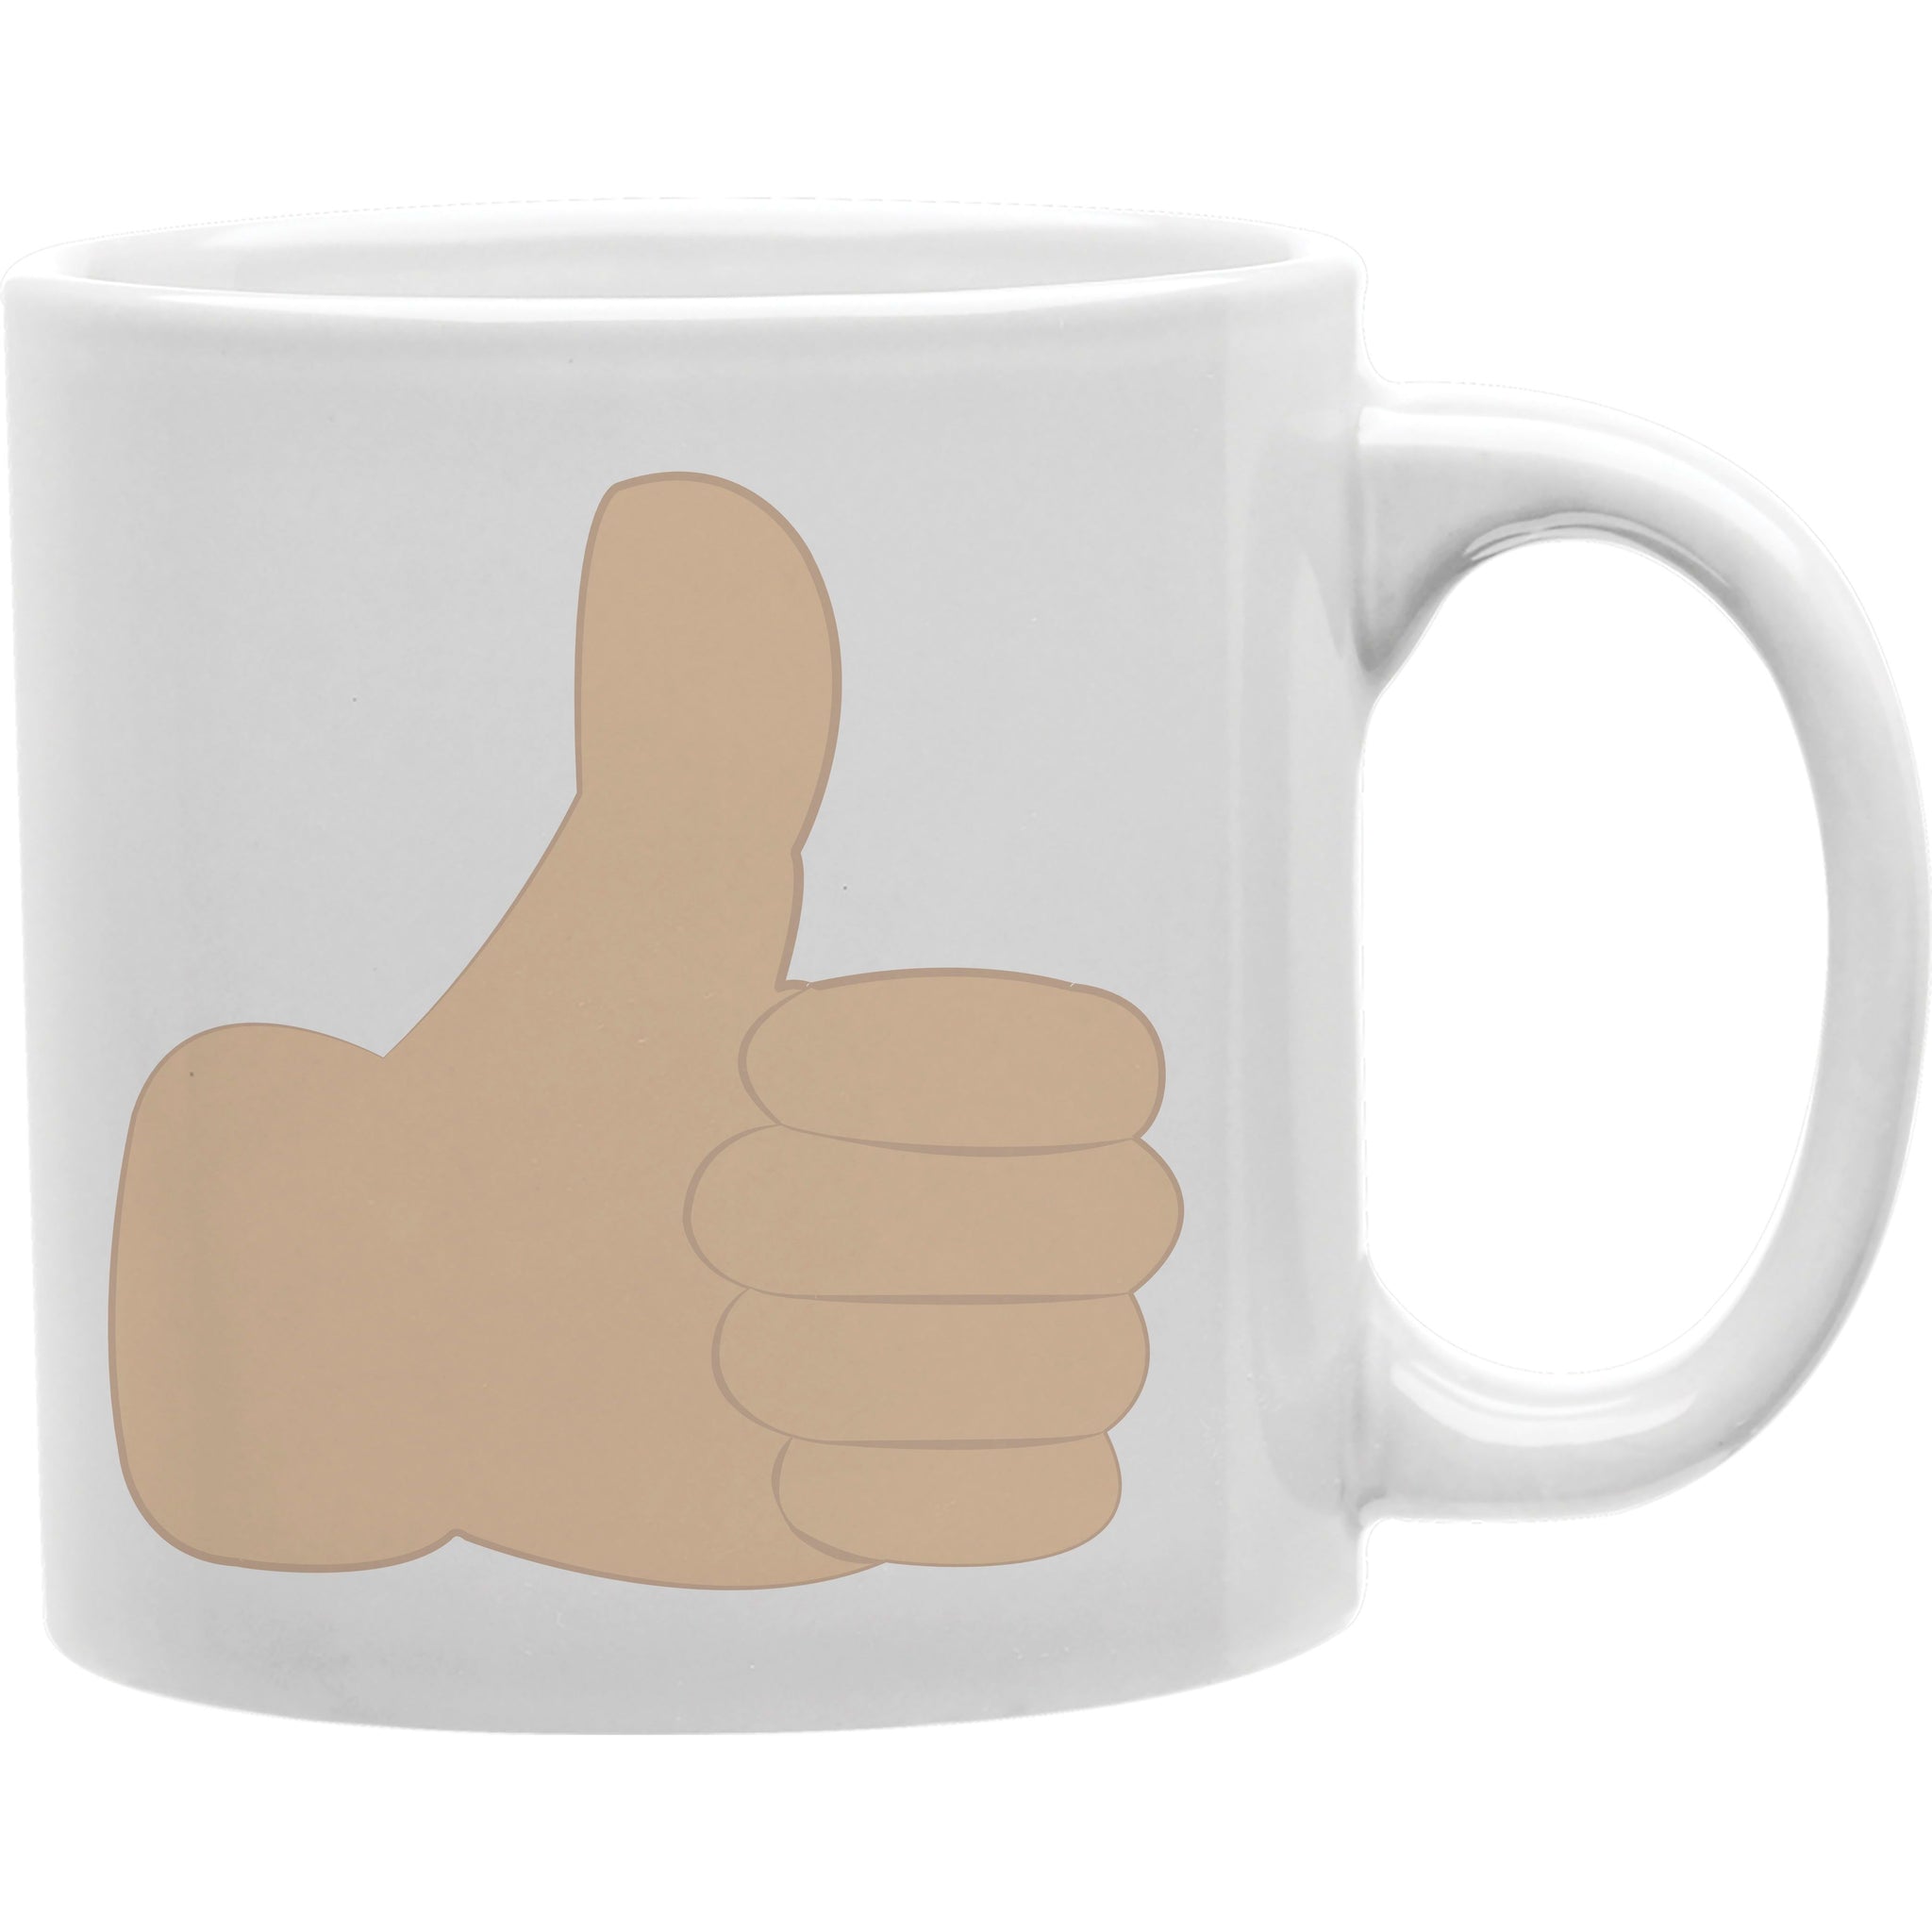 thumbs up handshapeEmoji coffee Mug  Coffee and Tea Ceramic  Mug 11oz